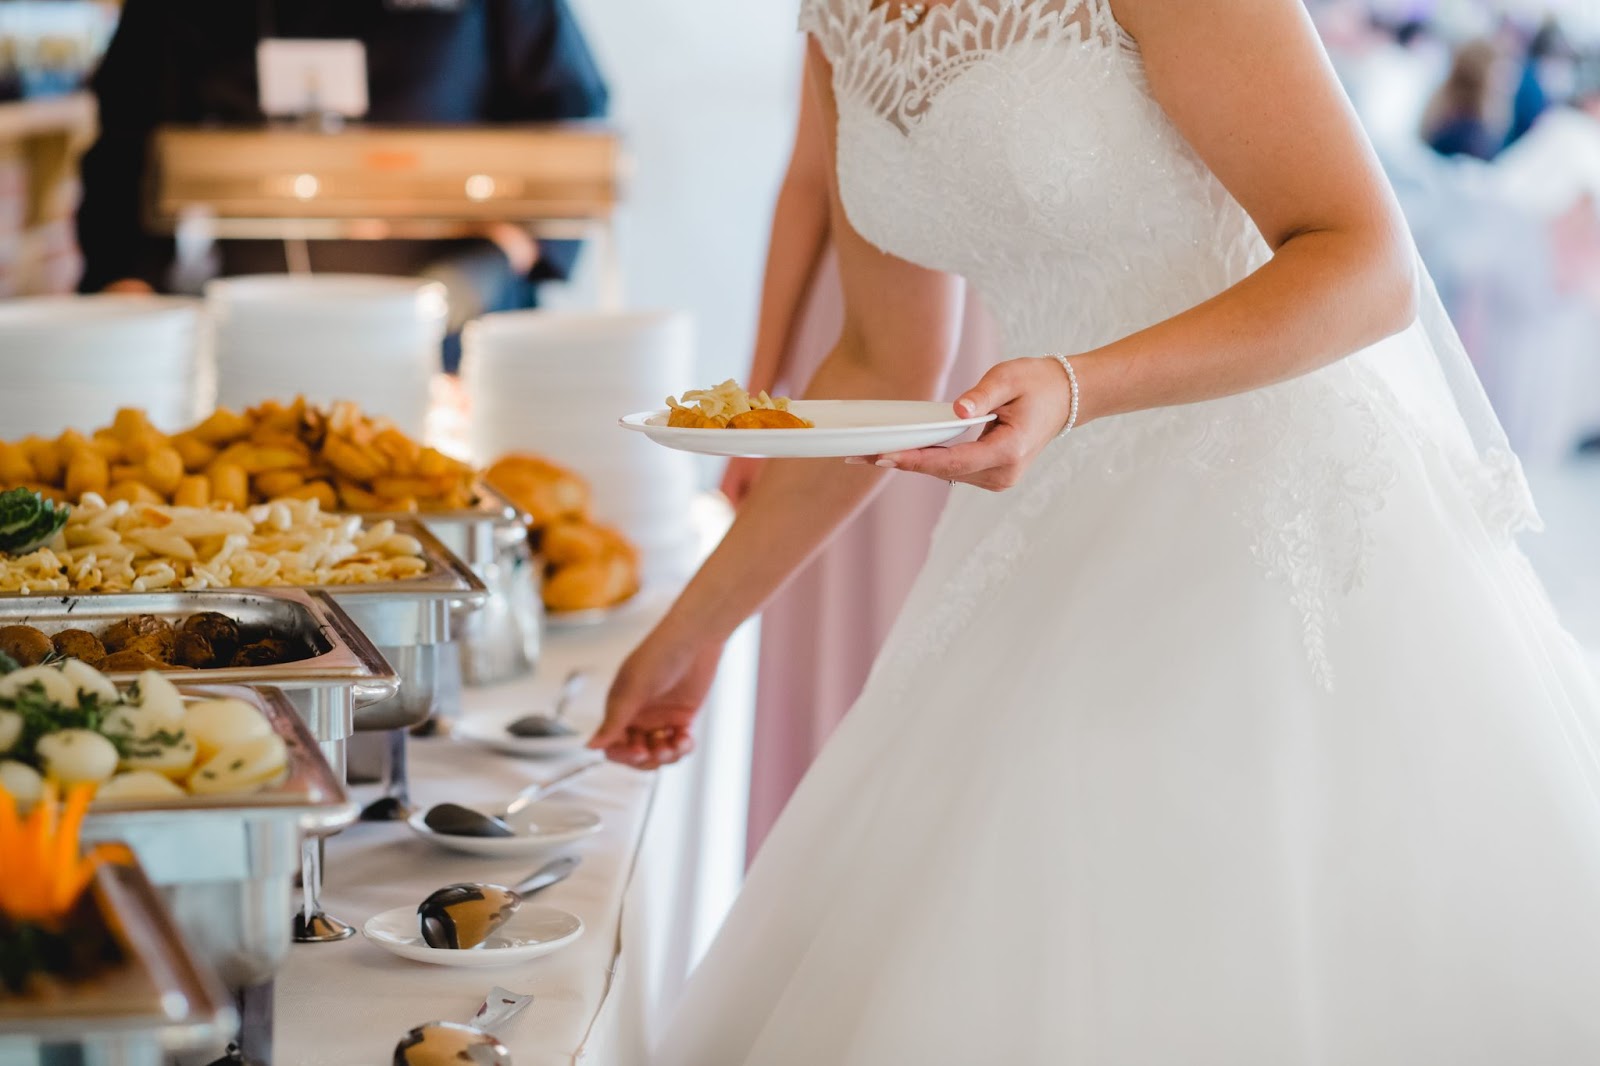 Wedding Horderves: The Options Are Plenty, Chef's Blog